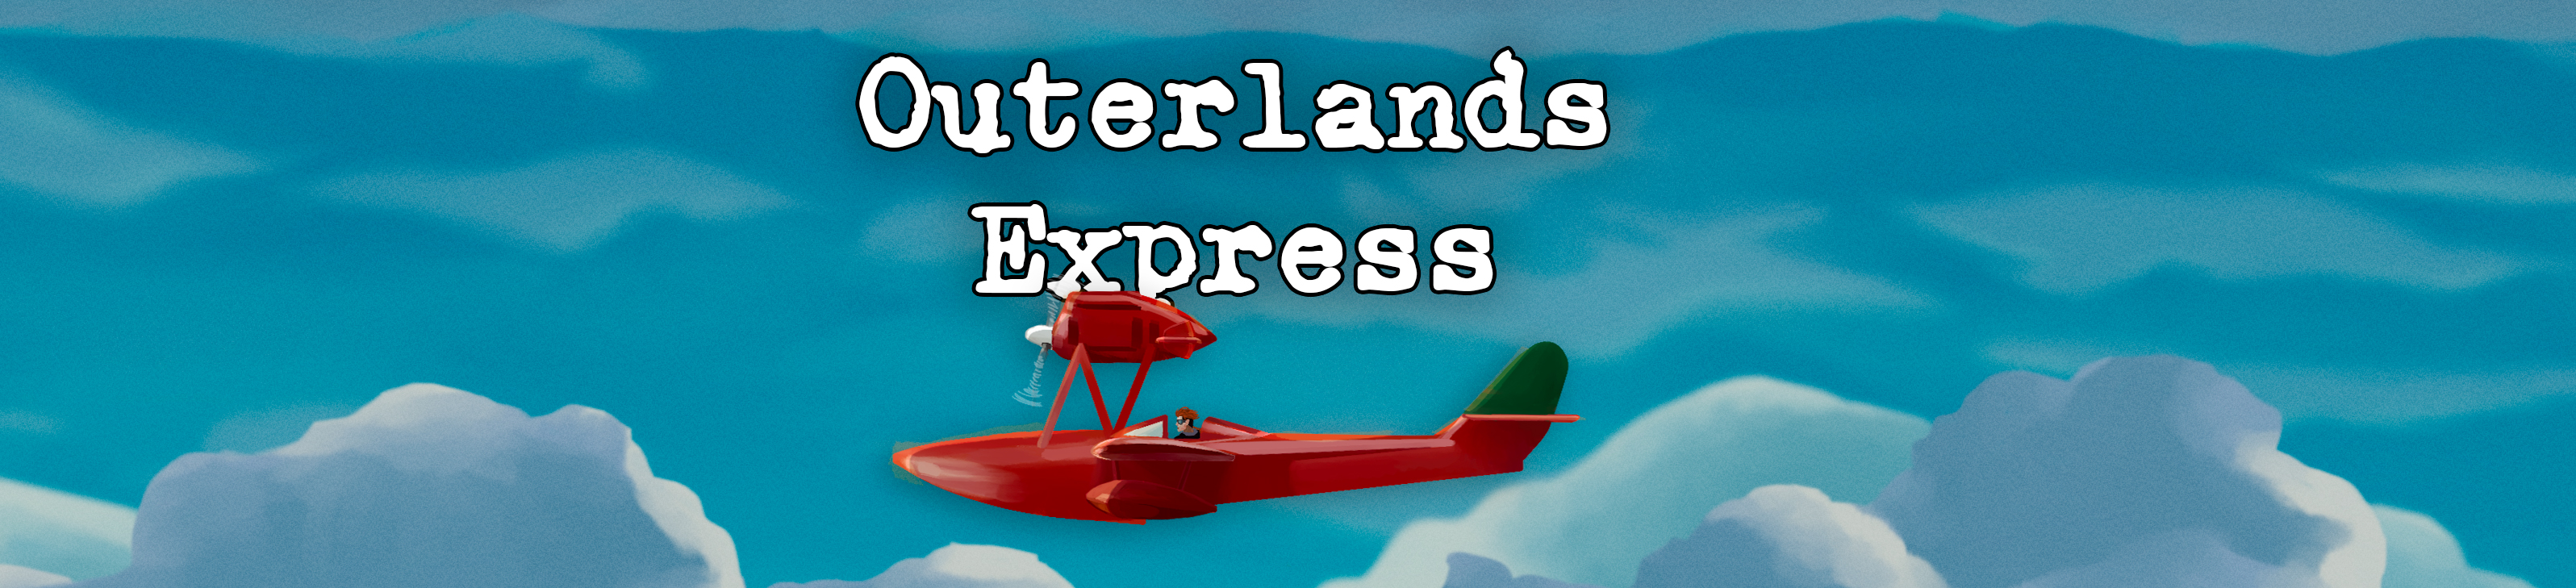 Outerlands Express